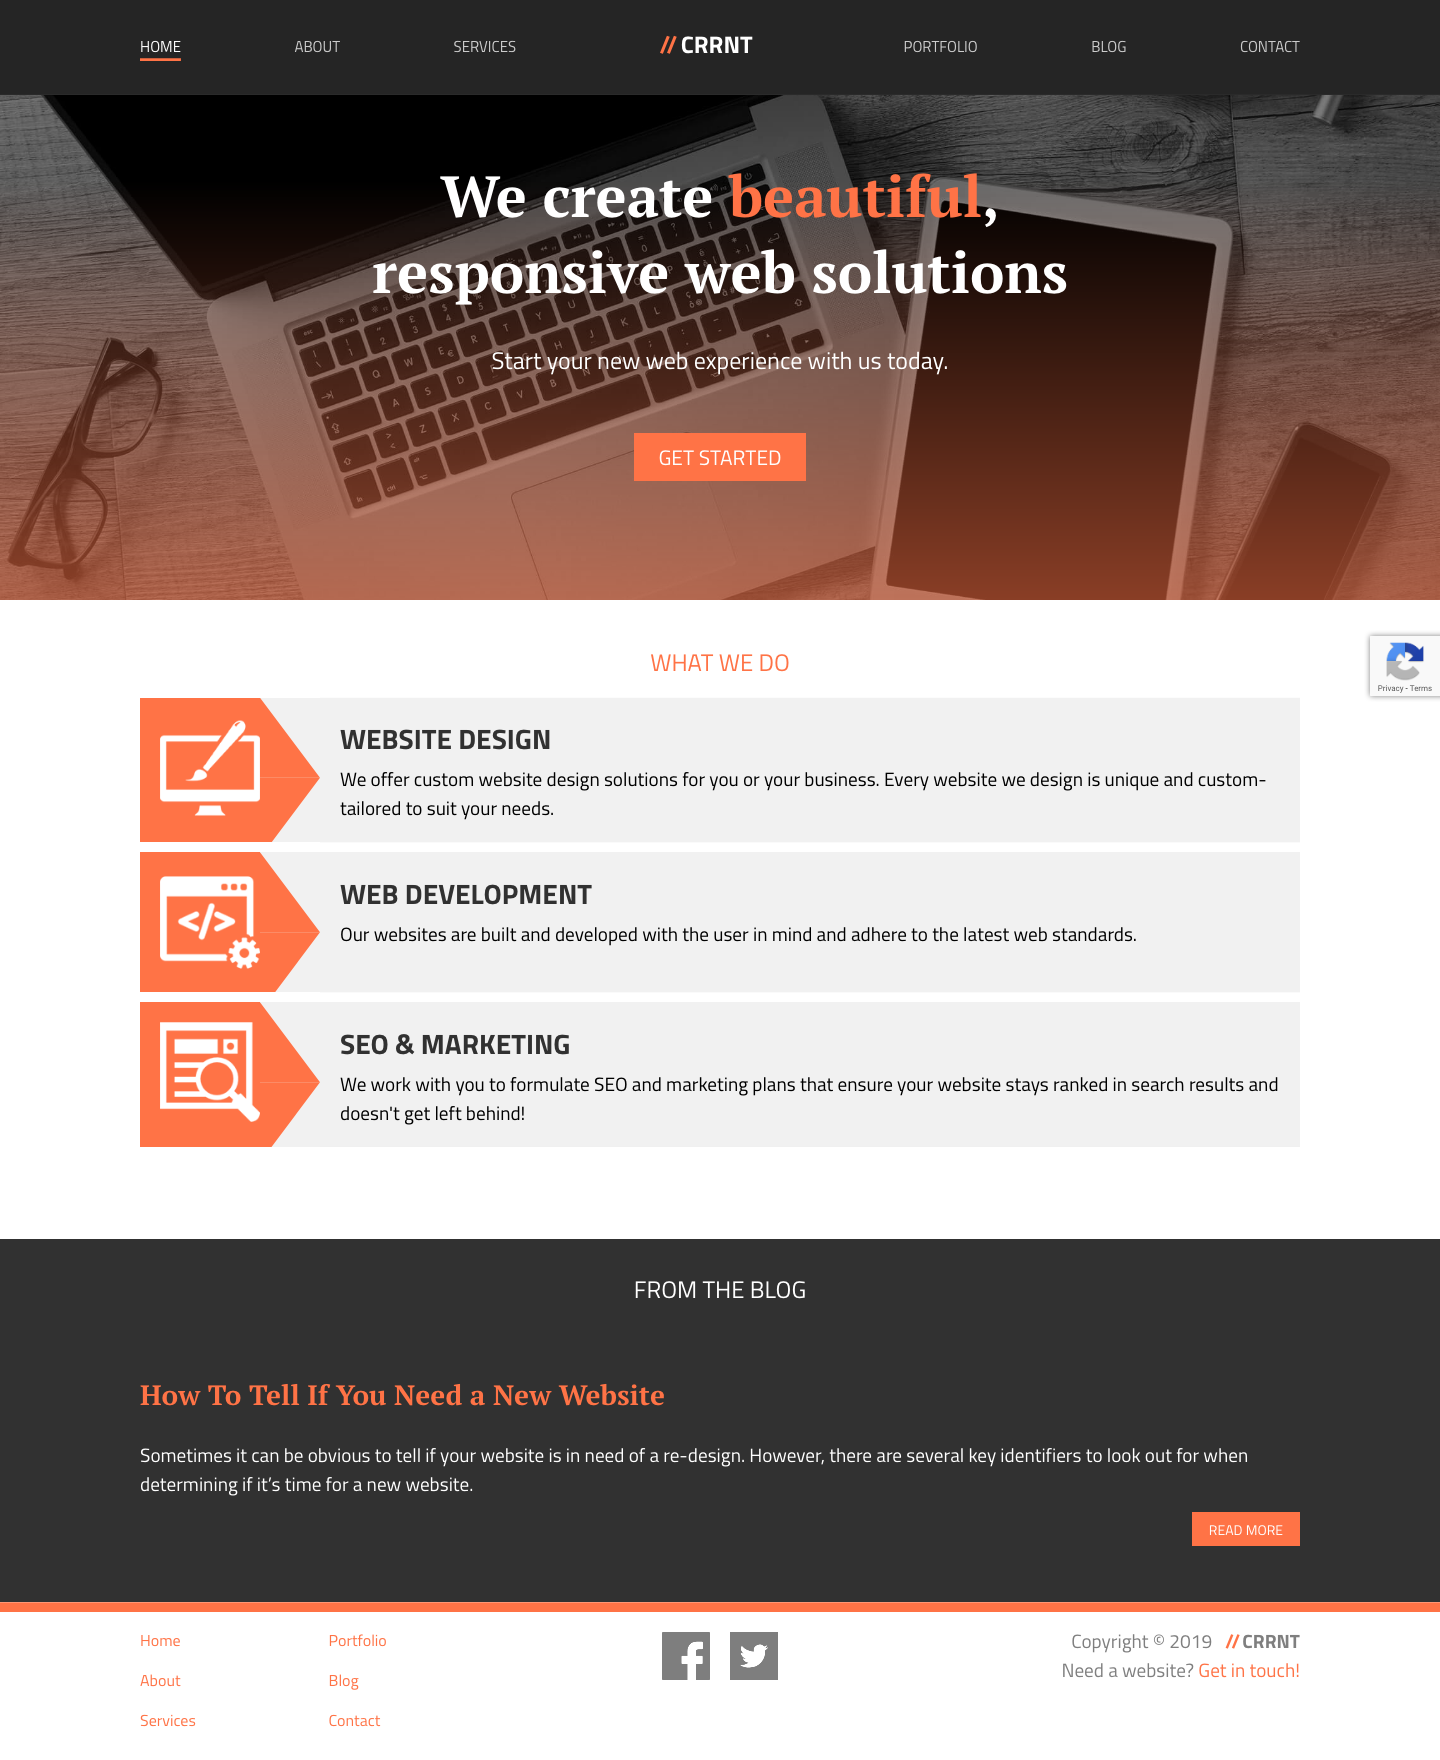 CRRNT Web Design site preview